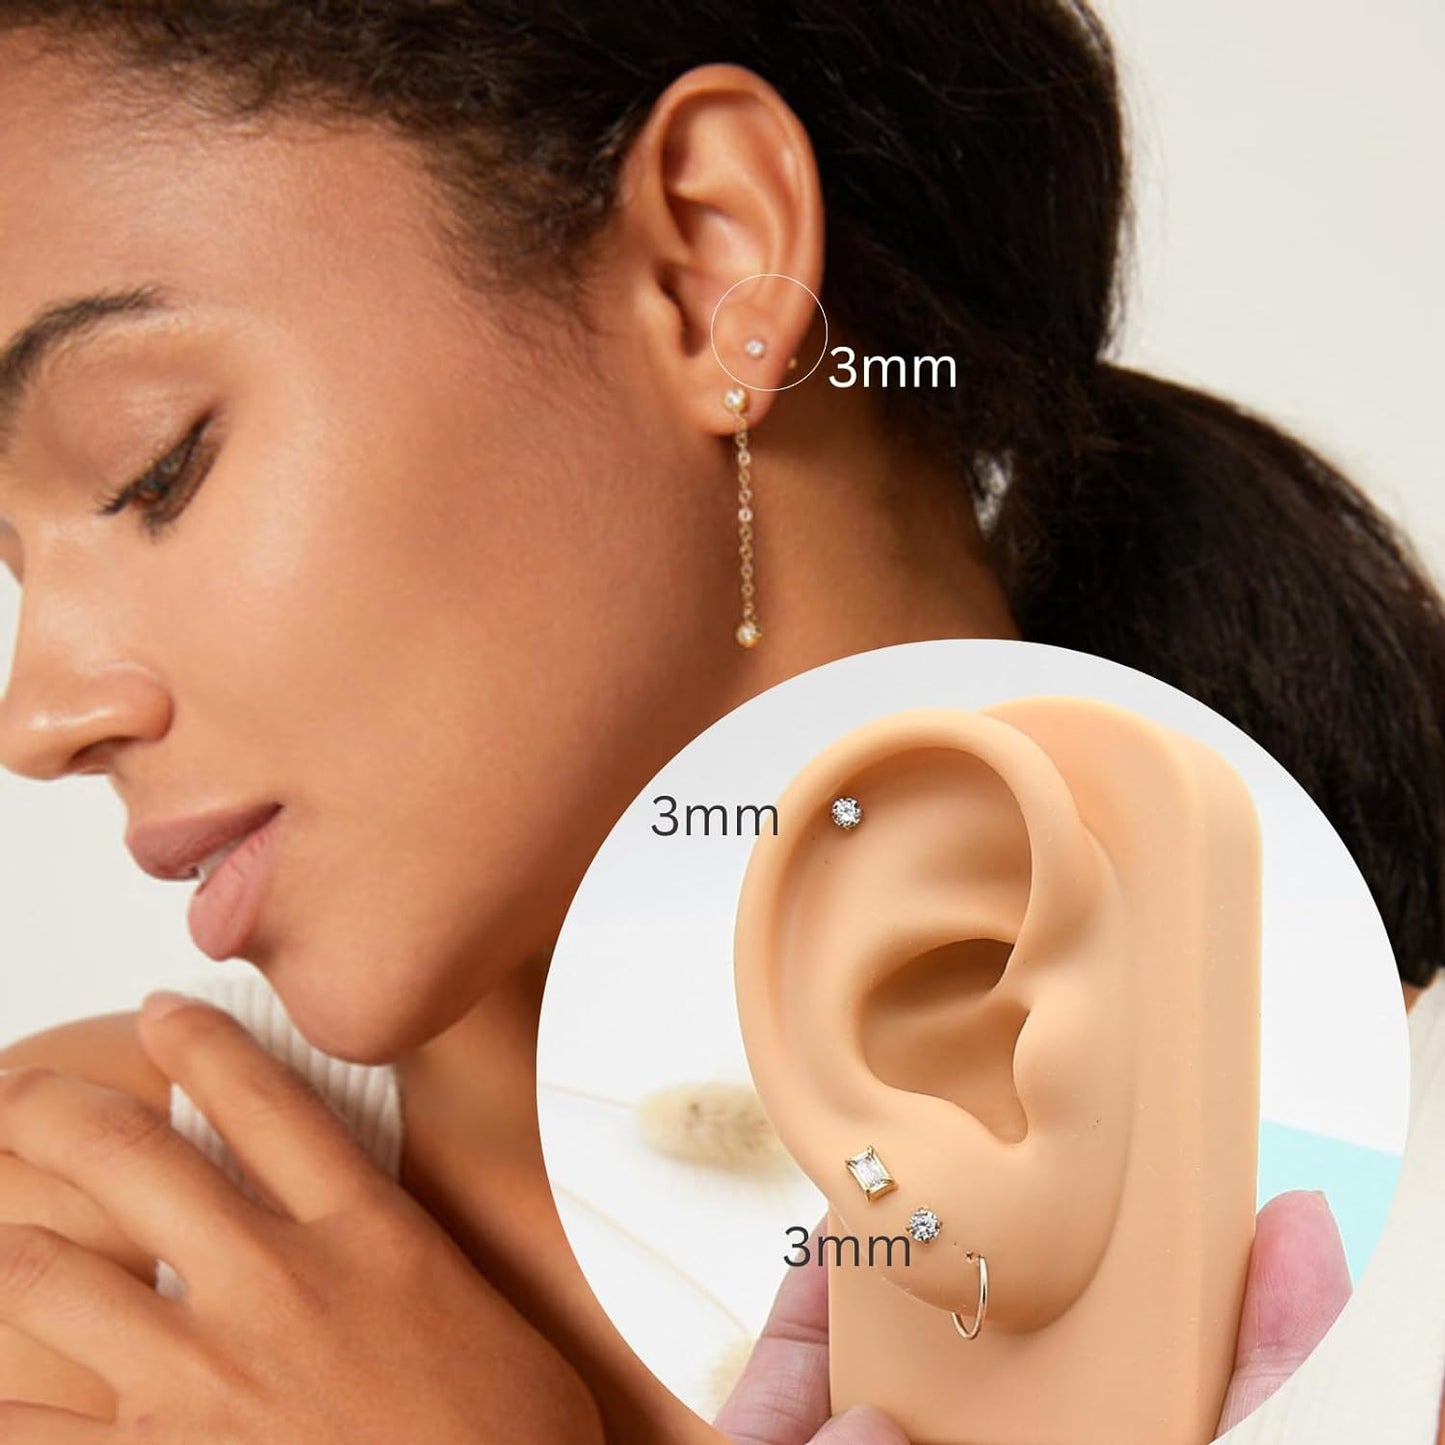 Small Gold Stud Flat Back Earrings for Women 14k Gold, Hypoallergenic Flatback Cartilage Earring Stud, Helix Conch Tragus Piercing Jewelry, Screw Back Tiny Earrings Studs (Gold, Green Emerald)